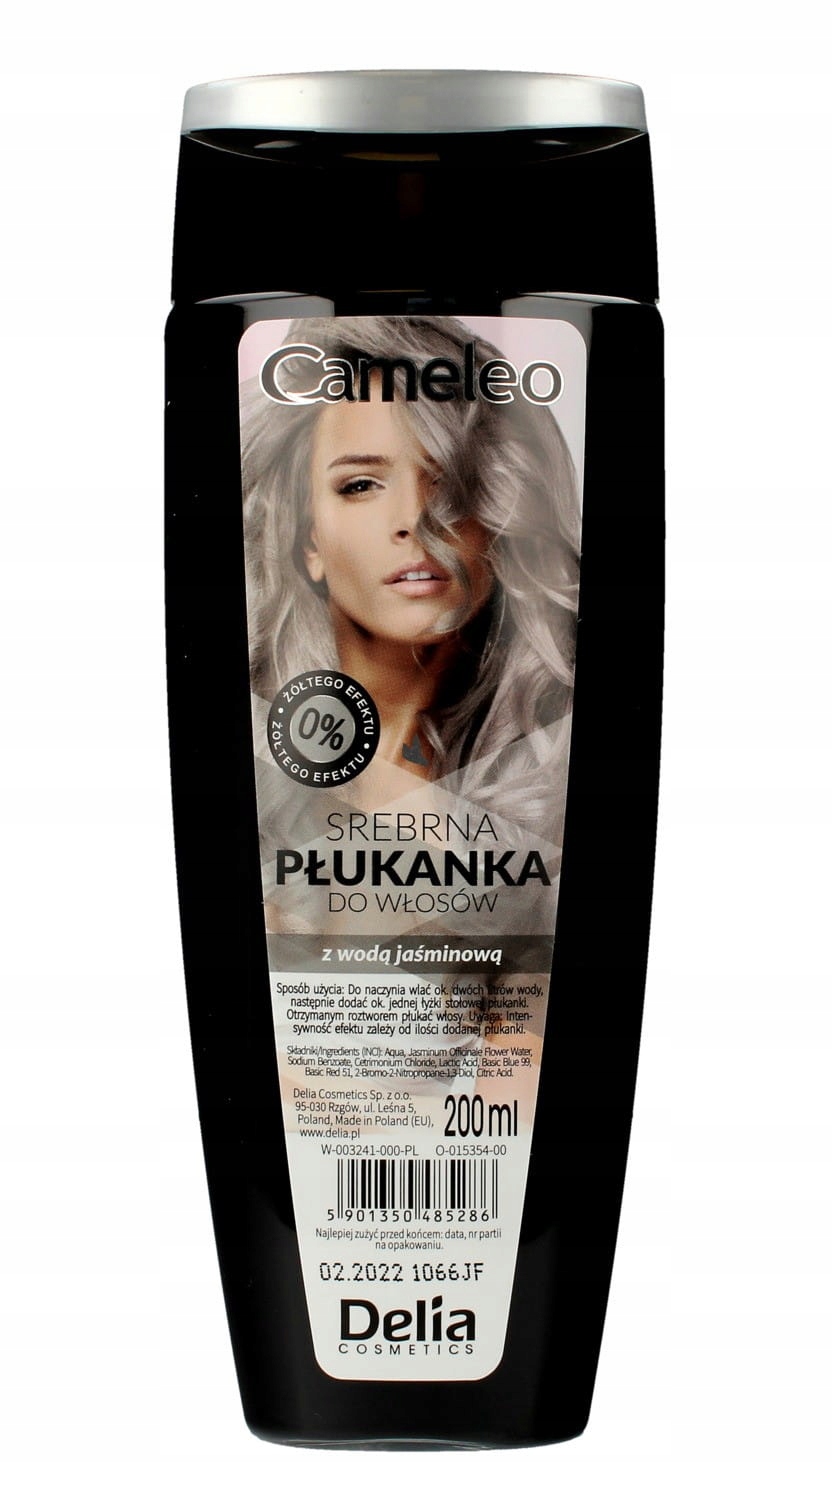 Оттеночные ополаскиватели. Cameleo оттеночный ополаскиватель. Delia Cameleo hair Coloring Shampoo 4.0. Delia Cosmetics Cameleo. Cameleo для волос.